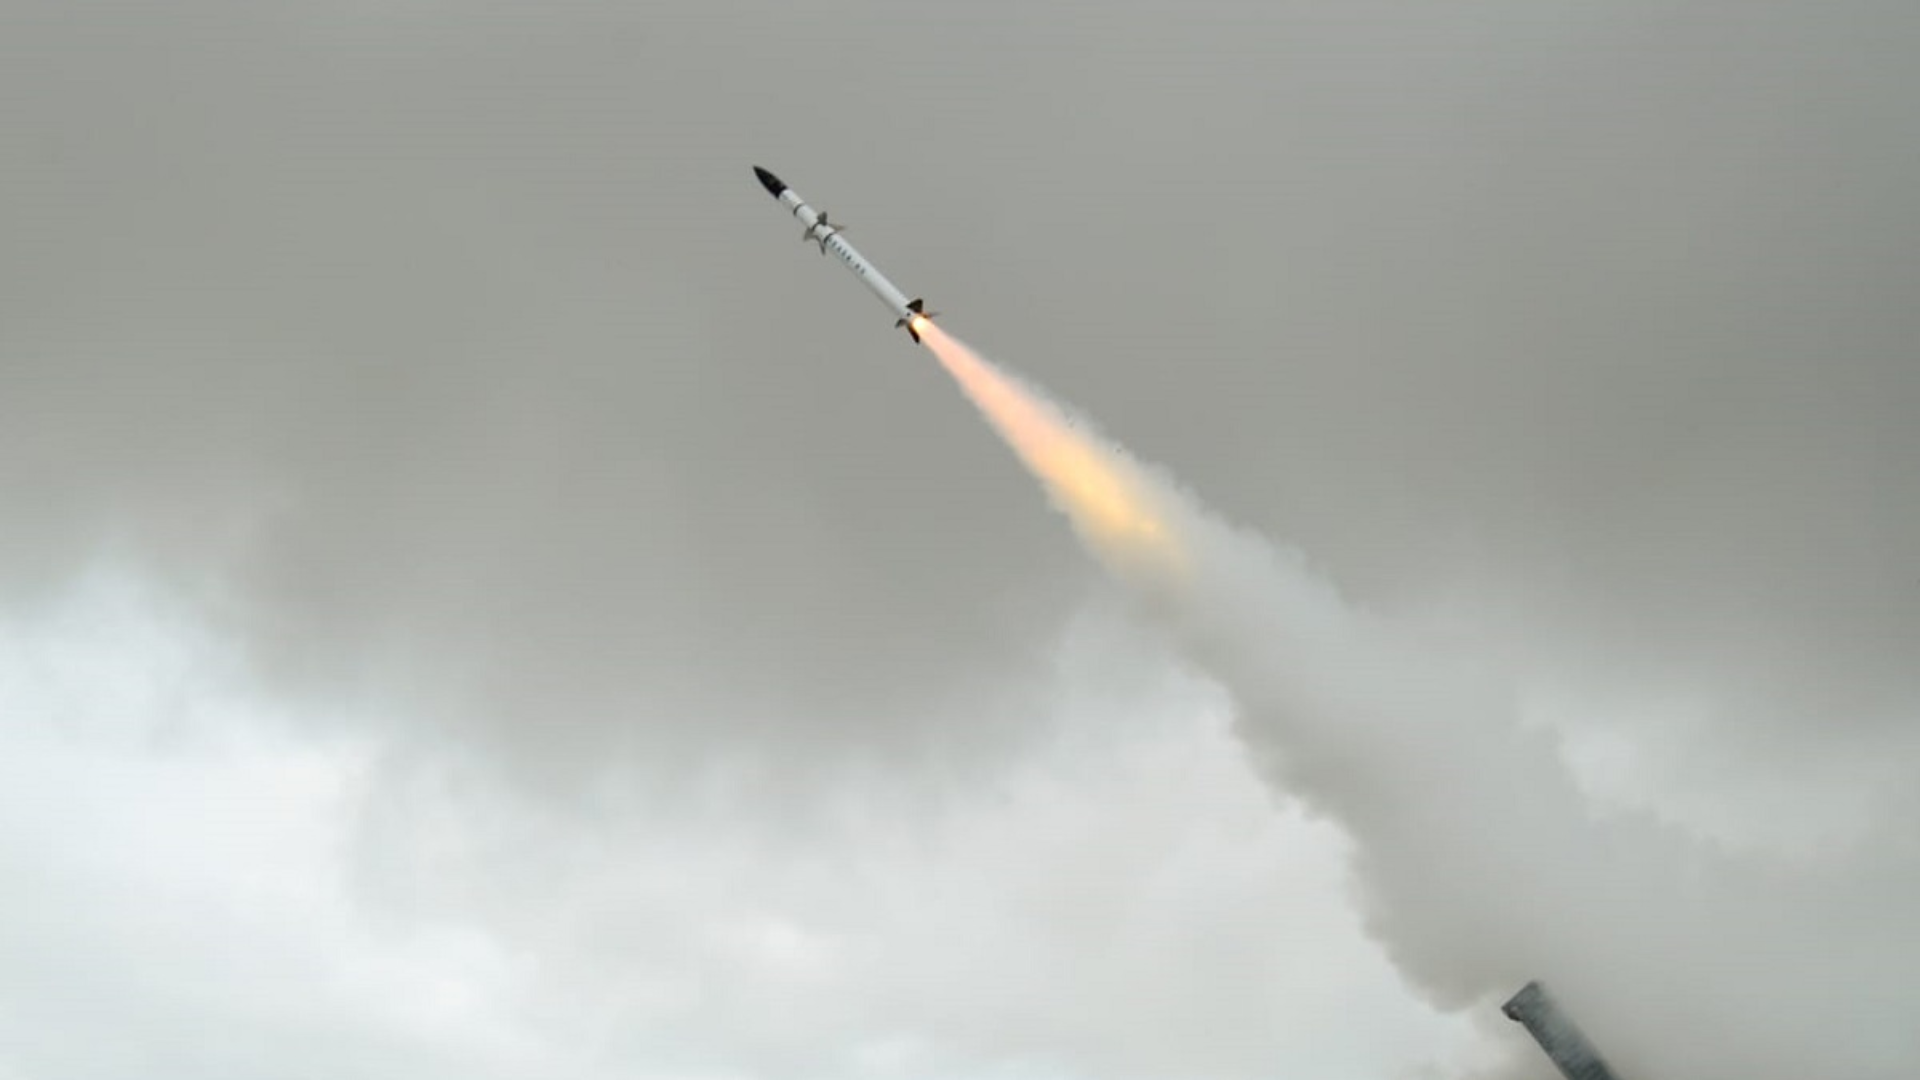 DRDO’s Indigenous Technology Cruise Missile Test hits milestone